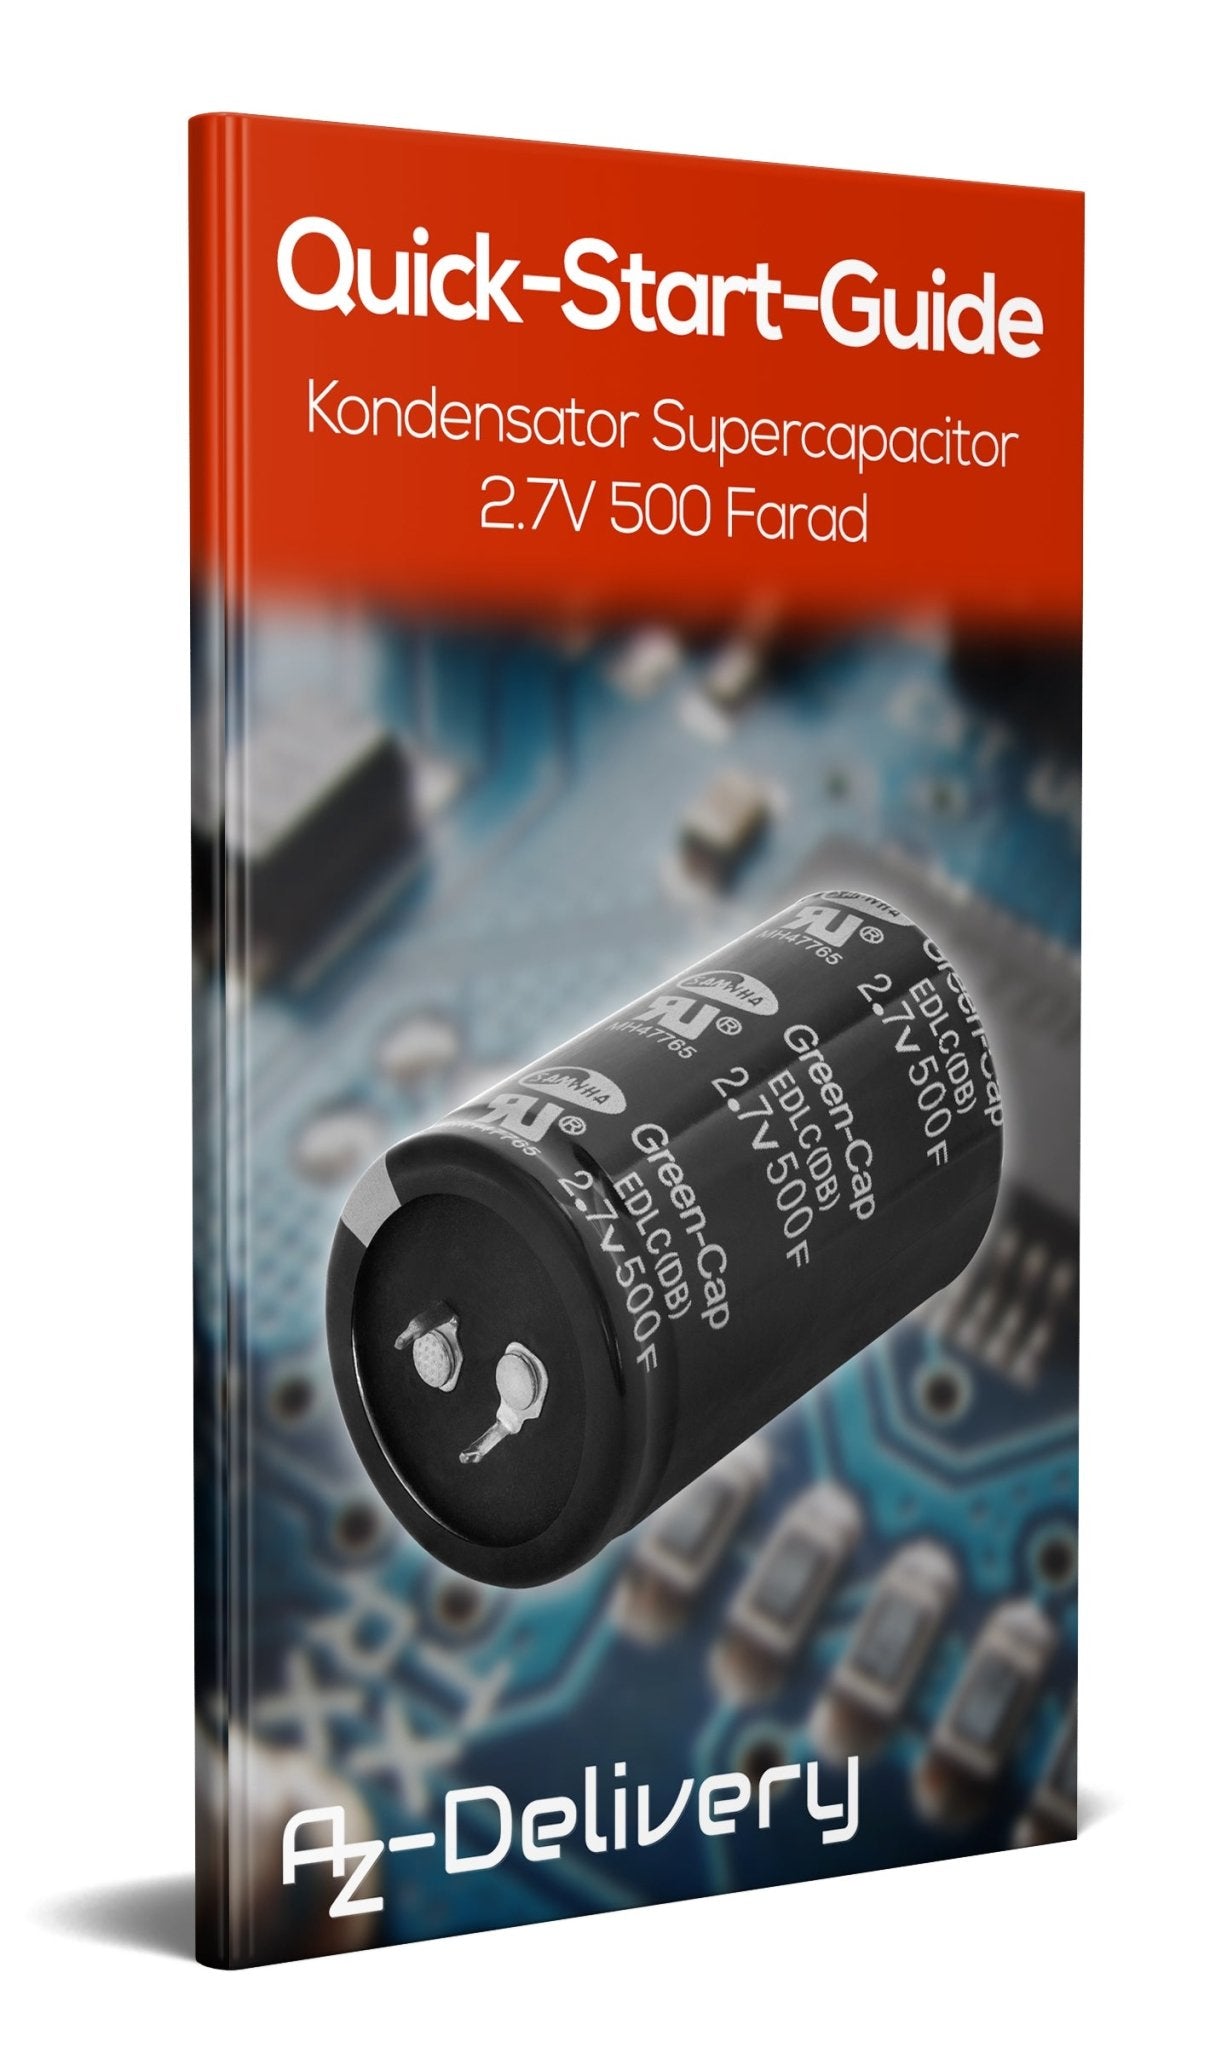 Kondensator Supercapacitor 2.7V 500 Farad - AZ-Delivery